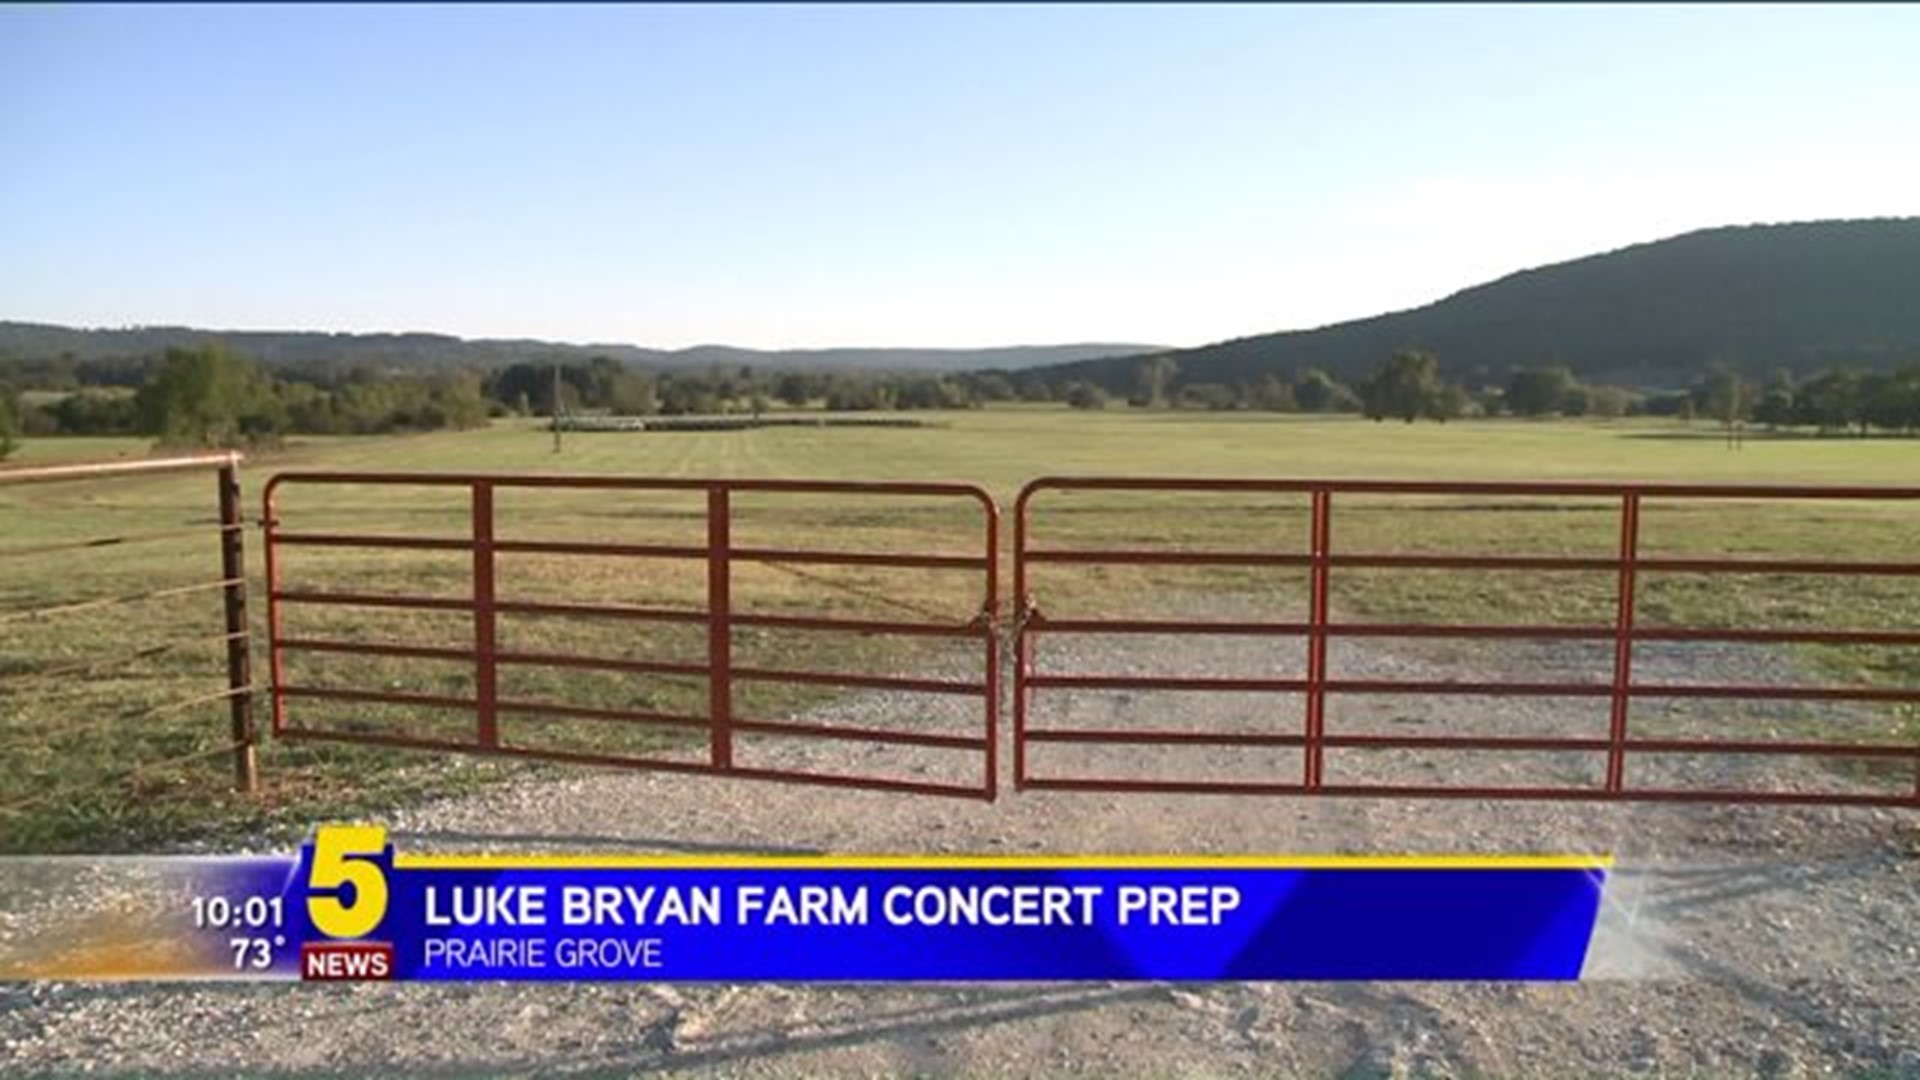 Luke Bryan Farm Concert Prep